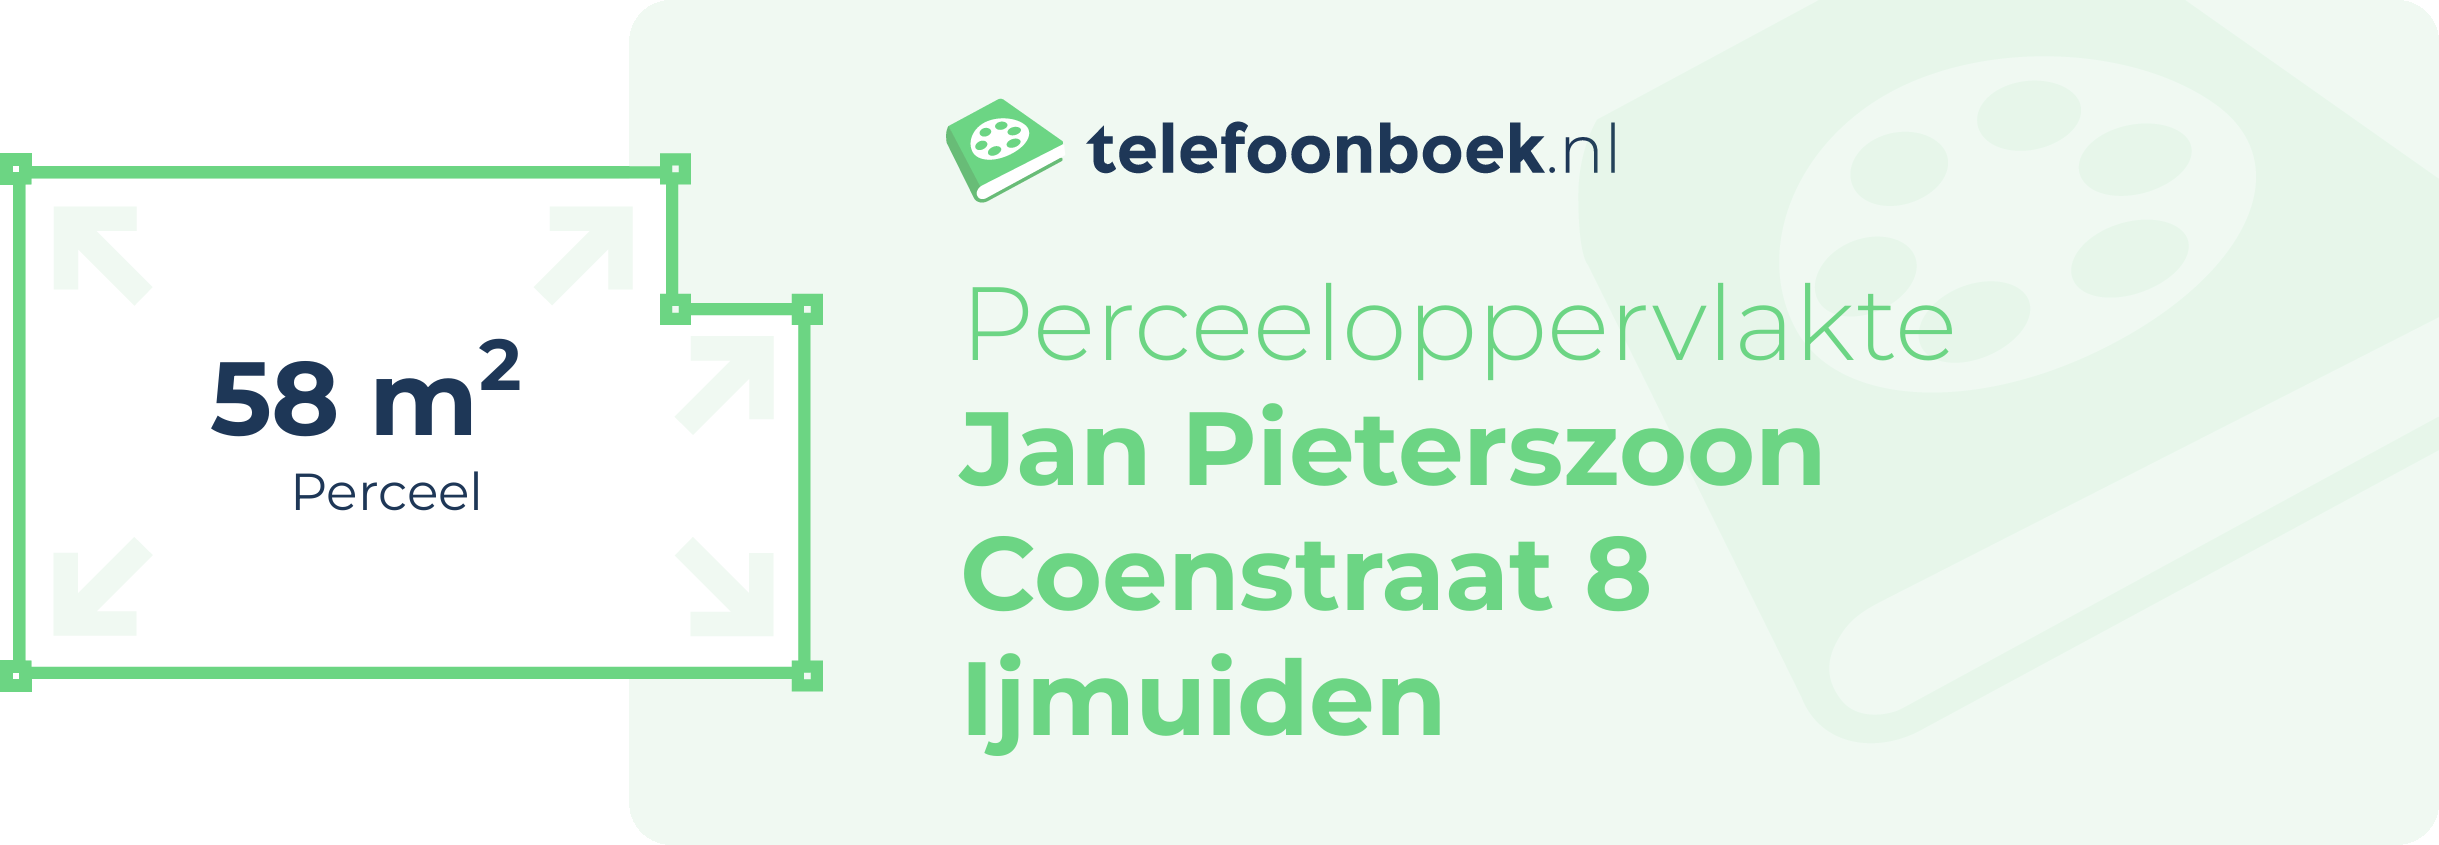 Perceeloppervlakte Jan Pieterszoon Coenstraat 8 Ijmuiden